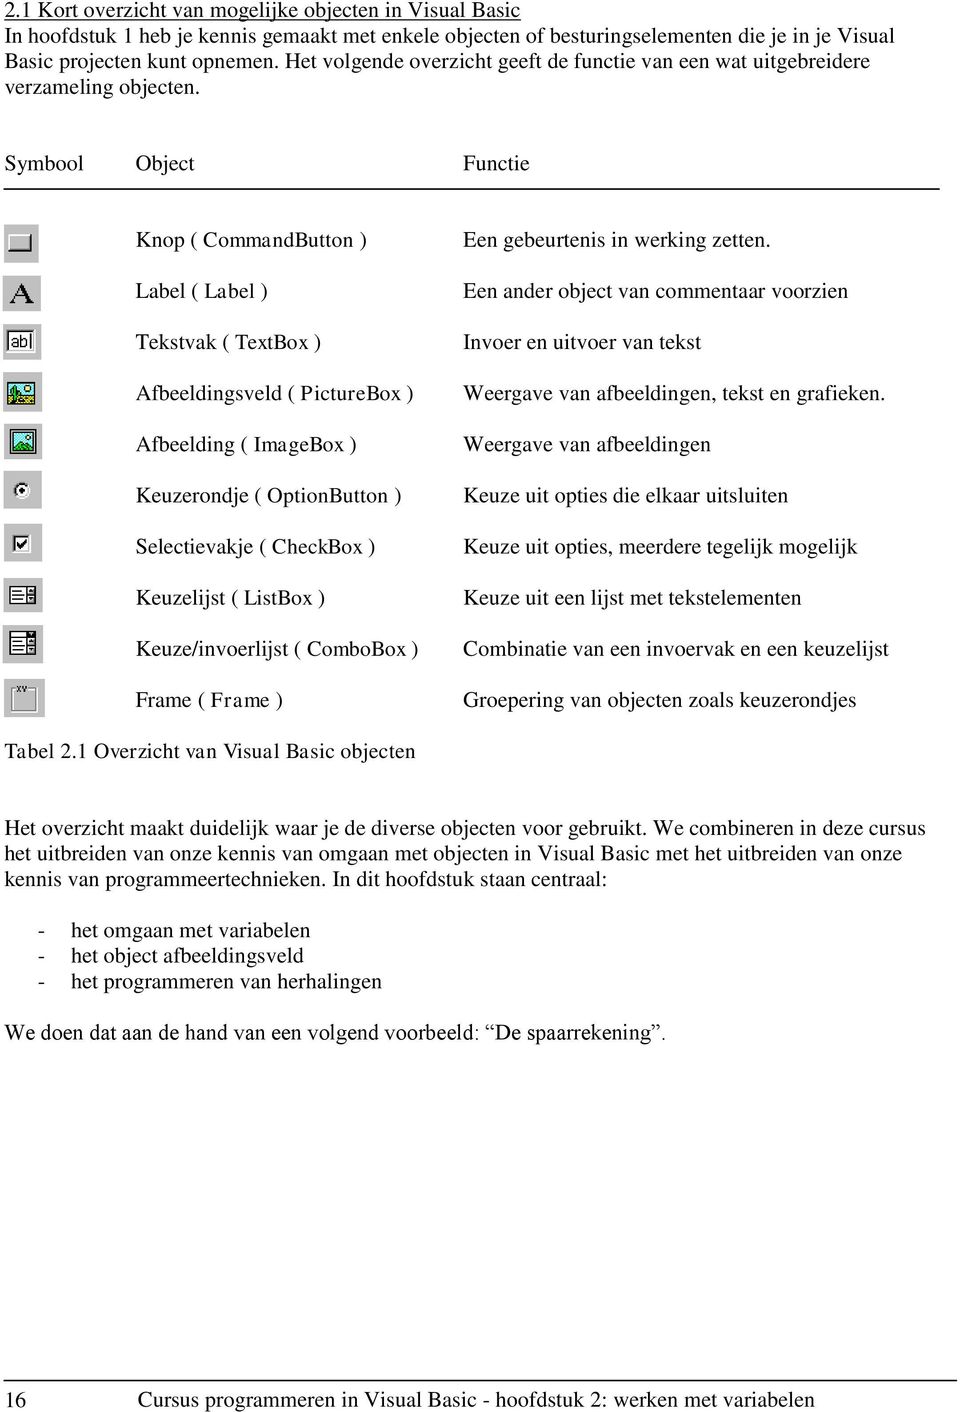 Symbool Object Functie Knop ( CommandButton ) Label ( Label ) Tekstvak ( TextBox ) Afbeeldingsveld ( PictureBox ) Afbeelding ( ImageBox ) Keuzerondje ( OptionButton ) Selectievakje ( CheckBox )